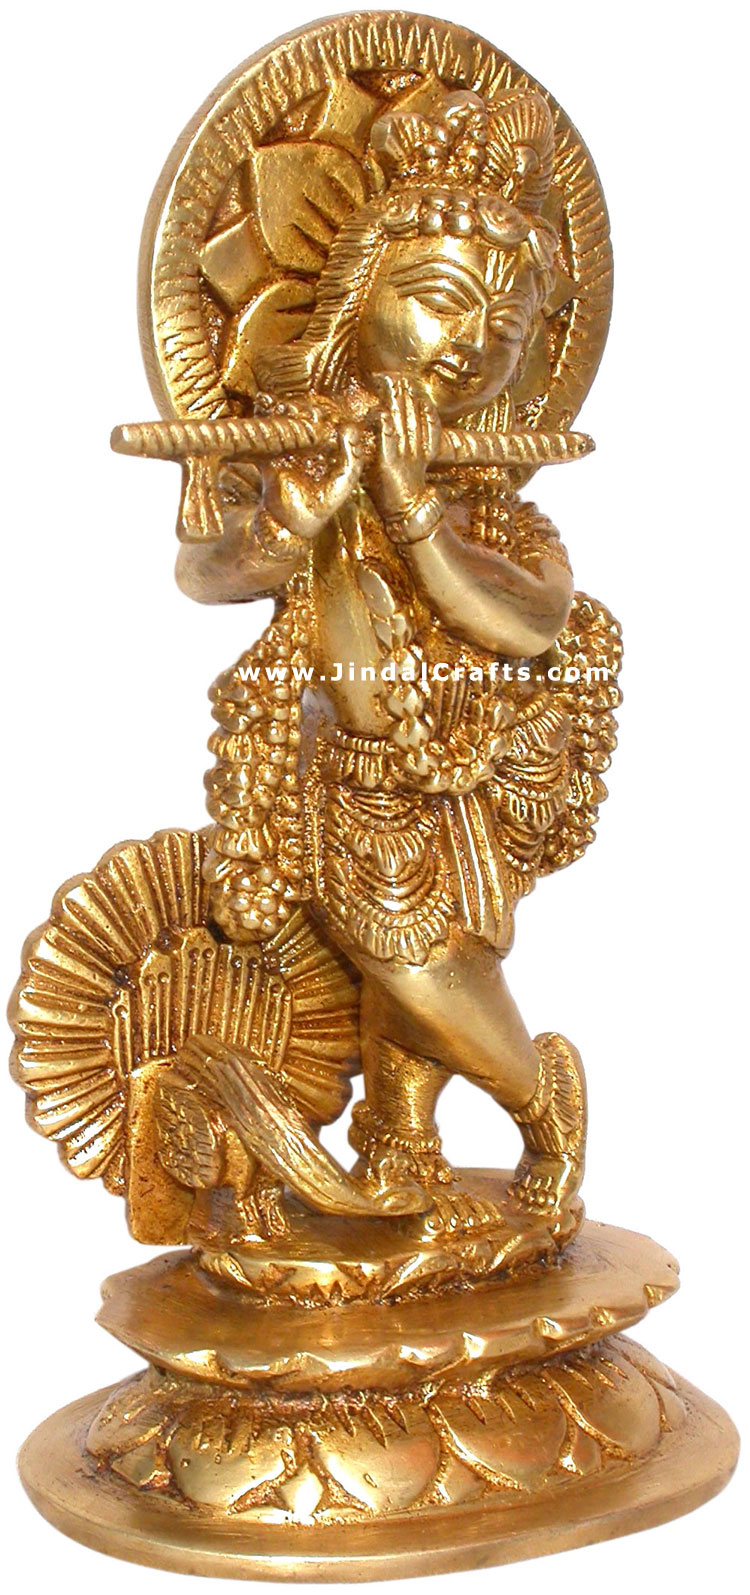 Lord Krishna Flute Hindu Religious Sculpture India Art